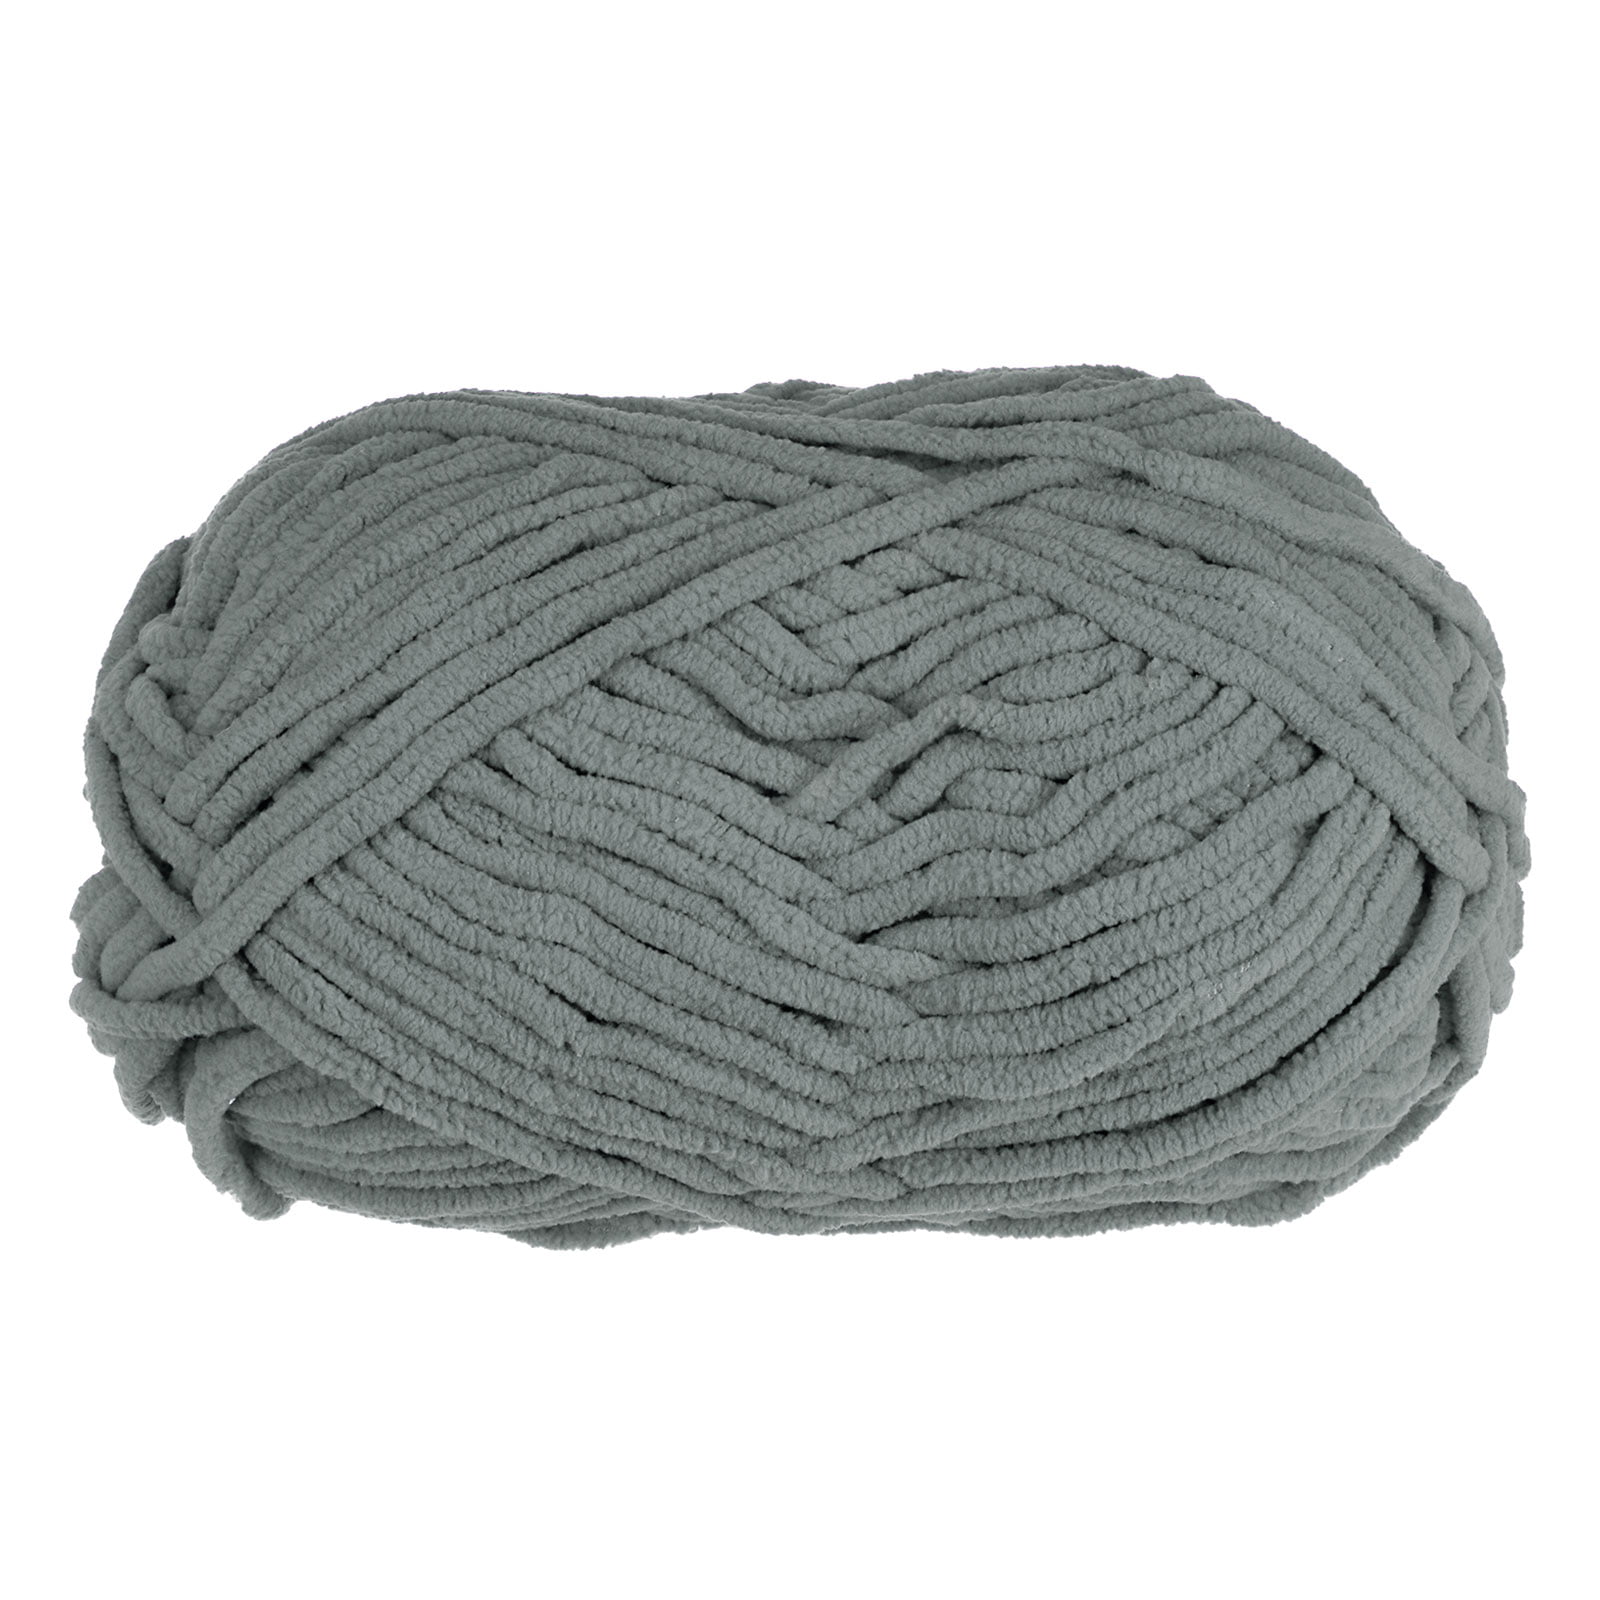 100g/ball Velvet Cotton Yarn Soft Knitting Wool Hand Crochet Yarn